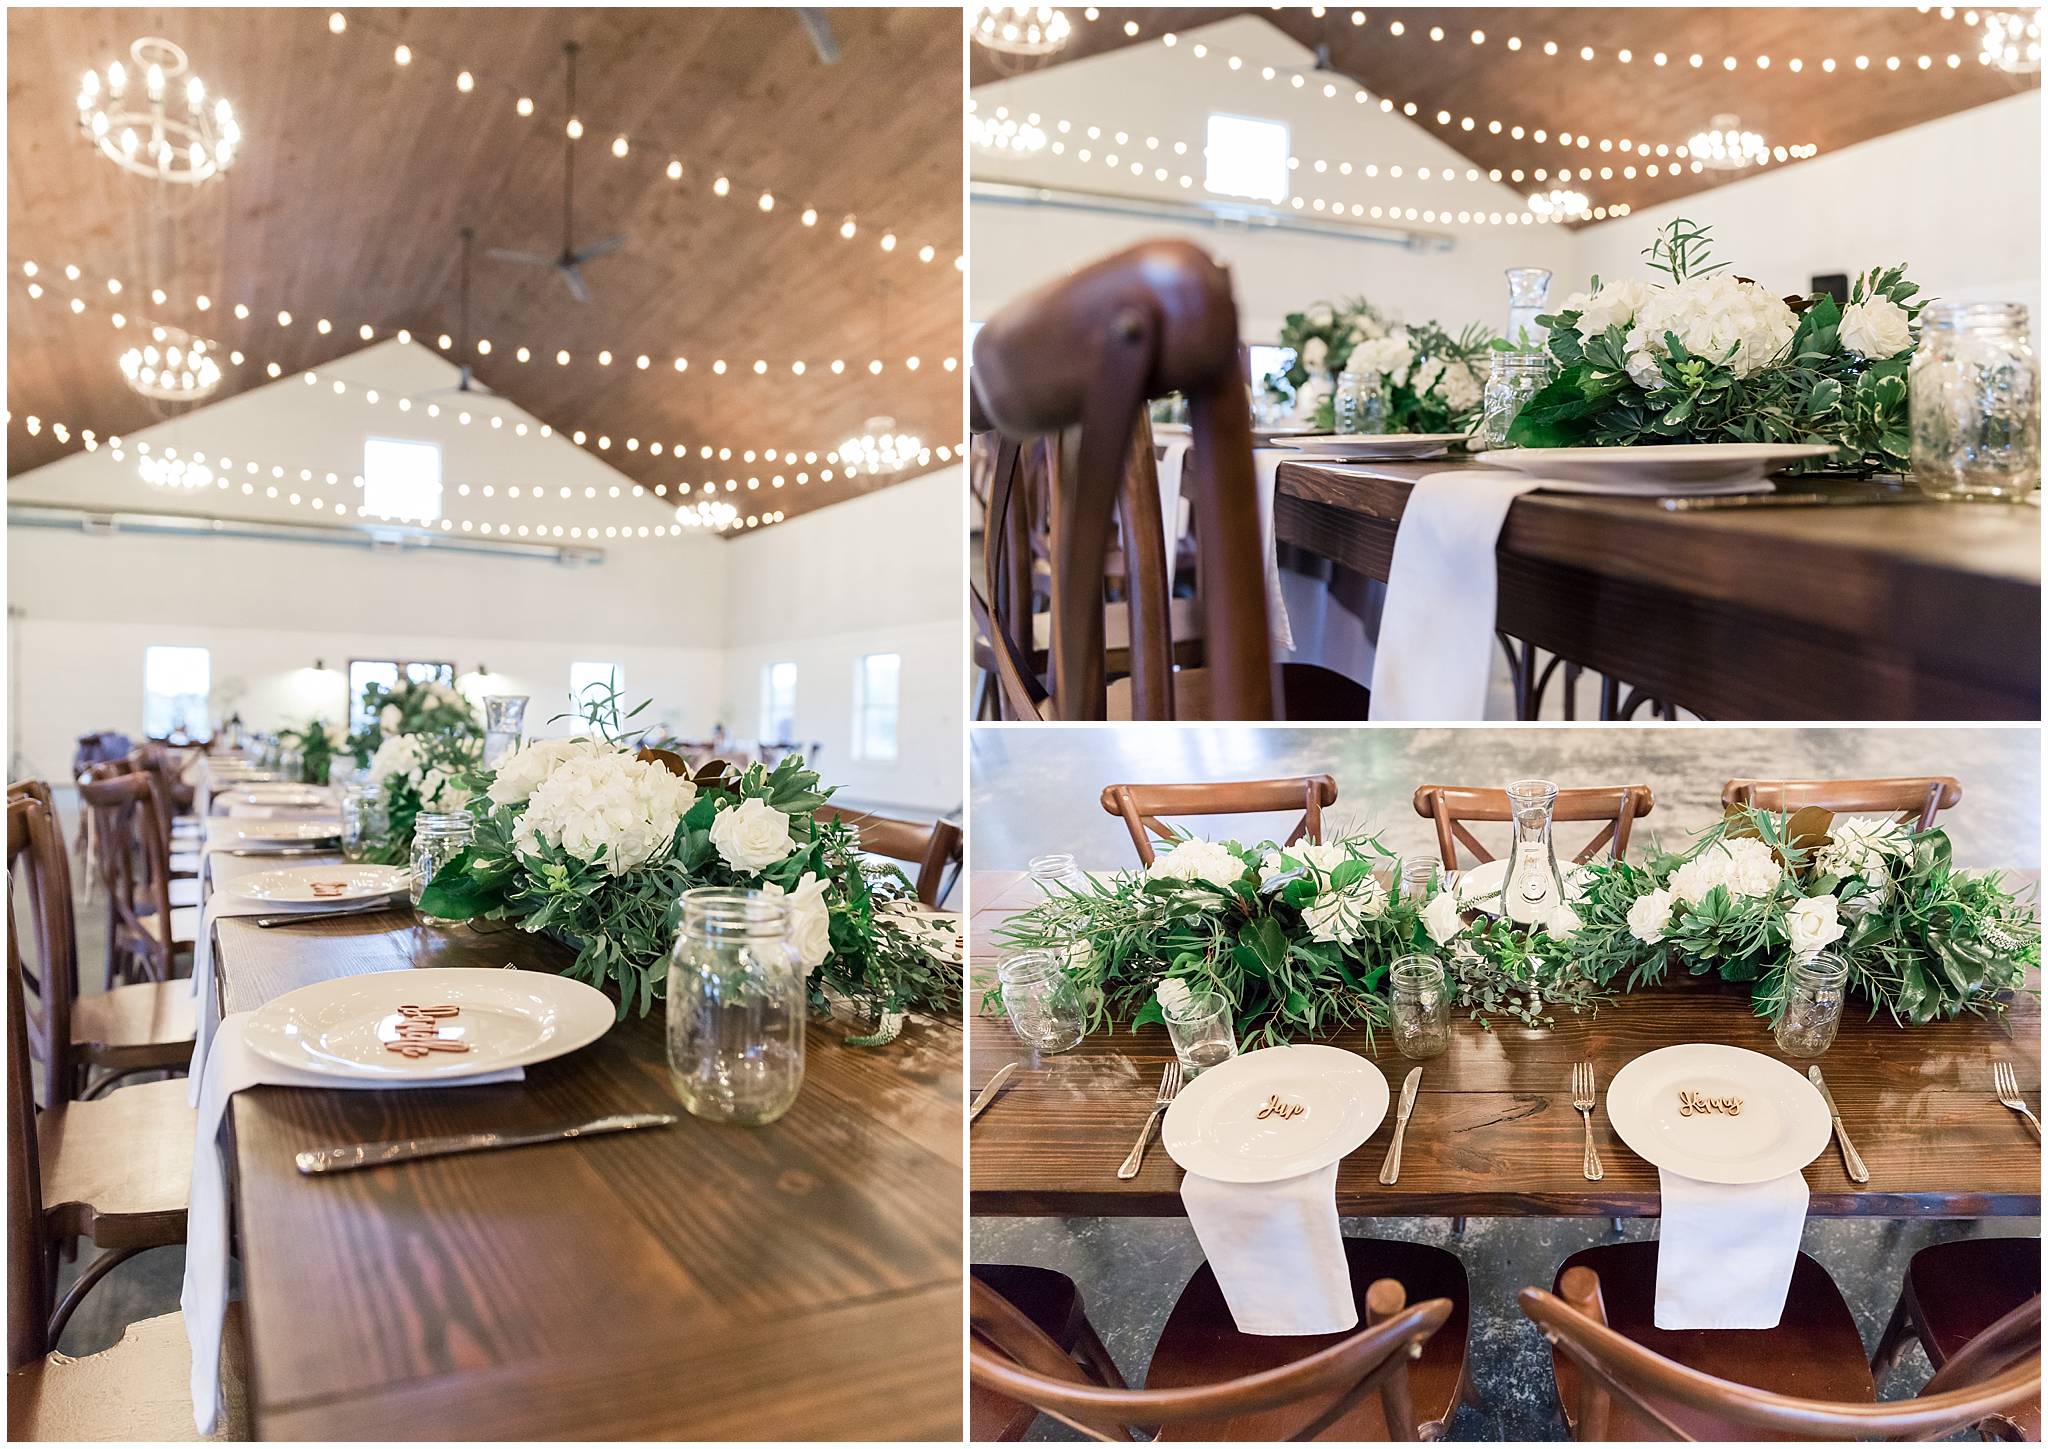 grant hill farms wedding reception details